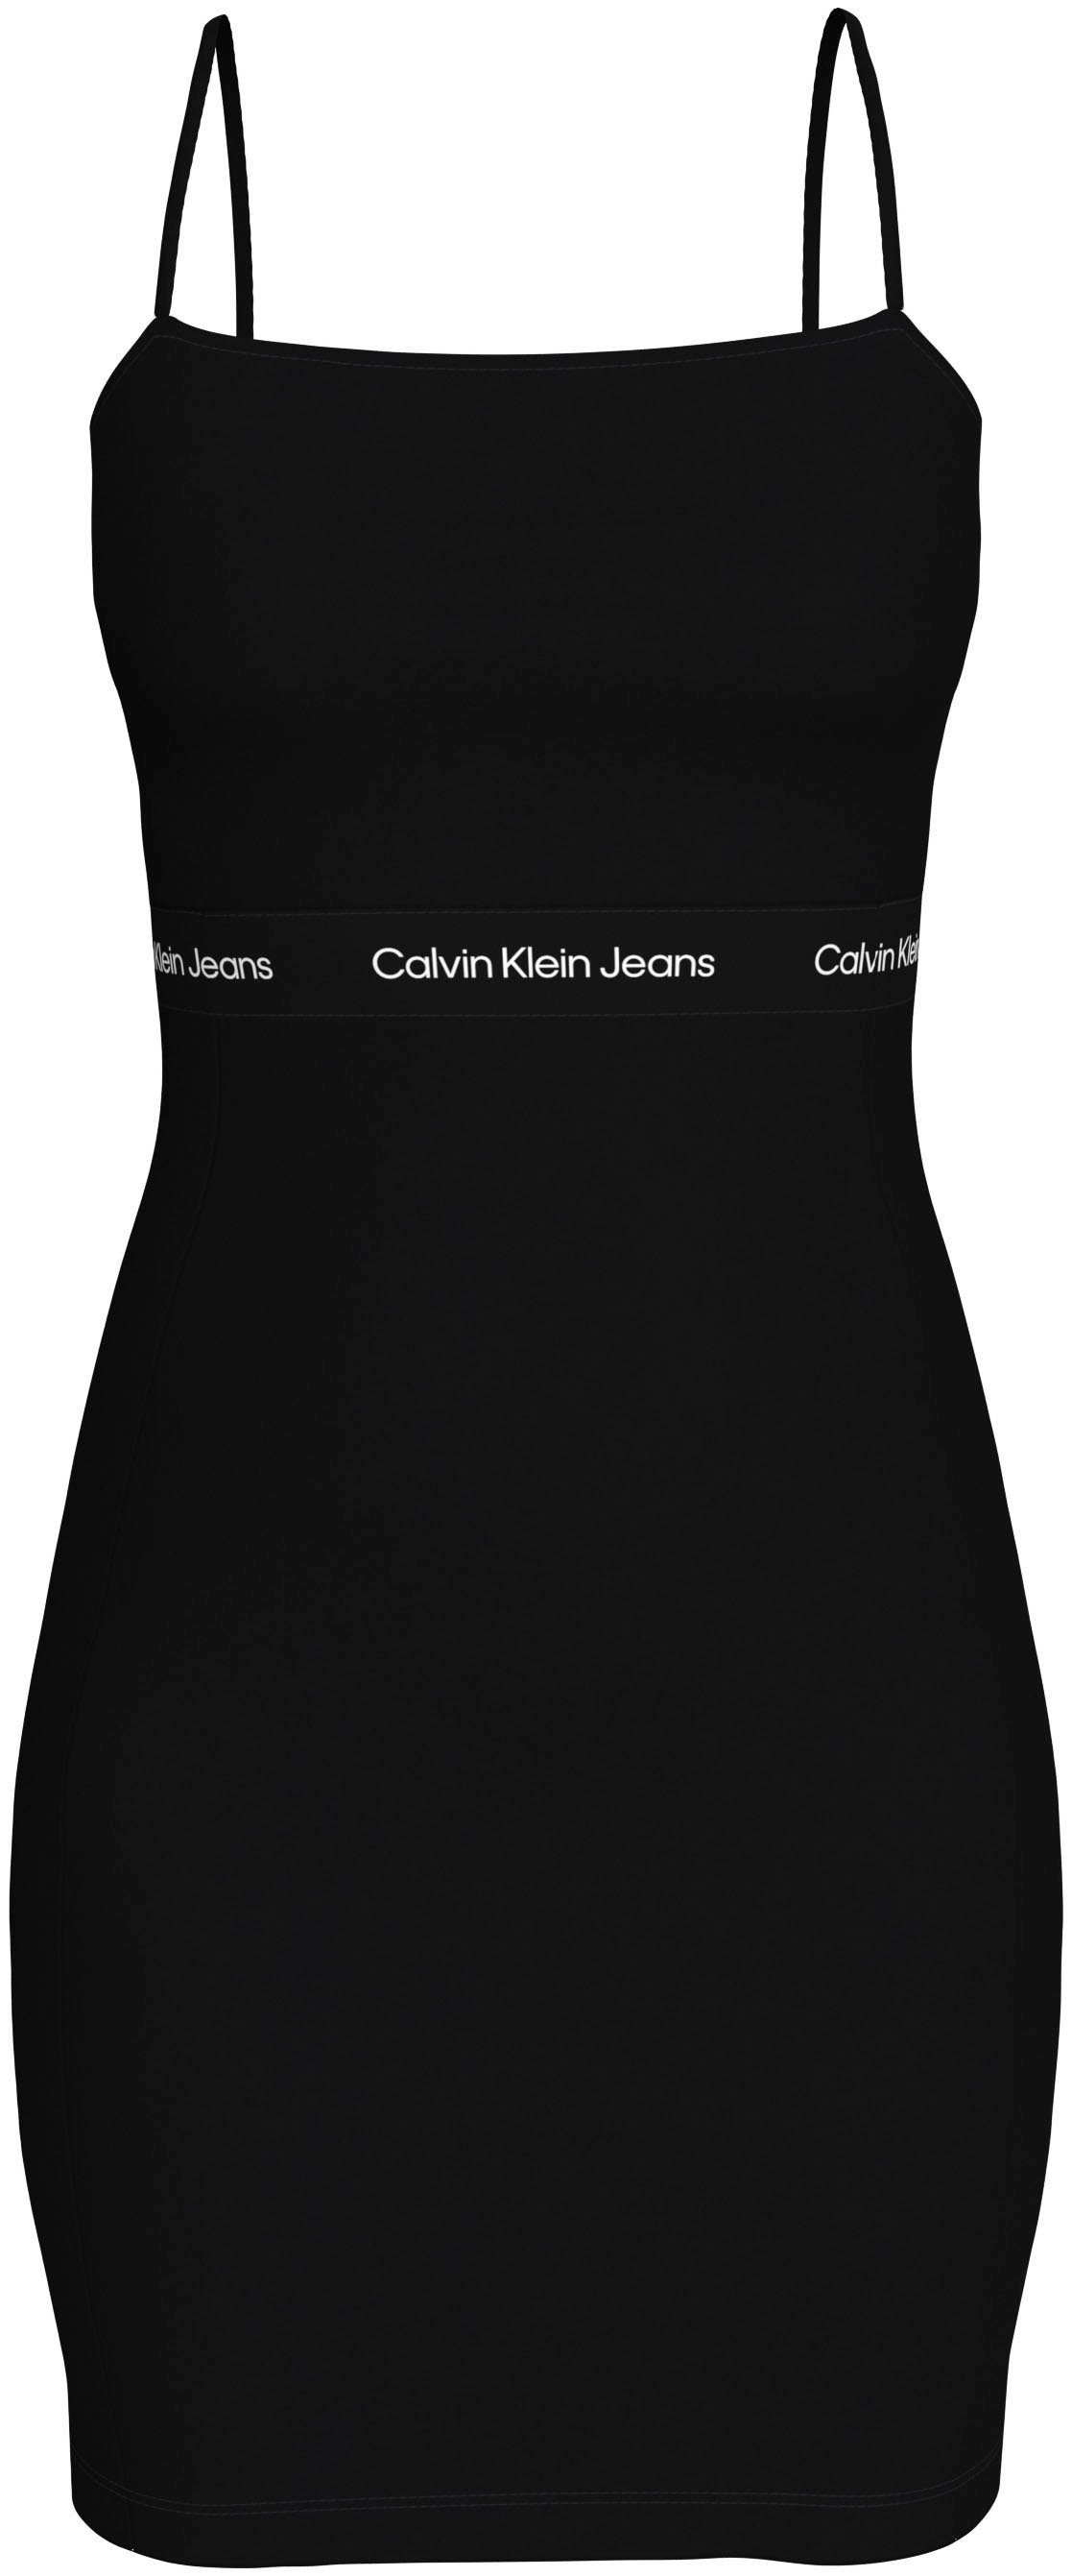 LOGO DRESS Calvin Klein Logomarkenlabel mit Jeans STRAPPY Spaghettikleid ELASTIC